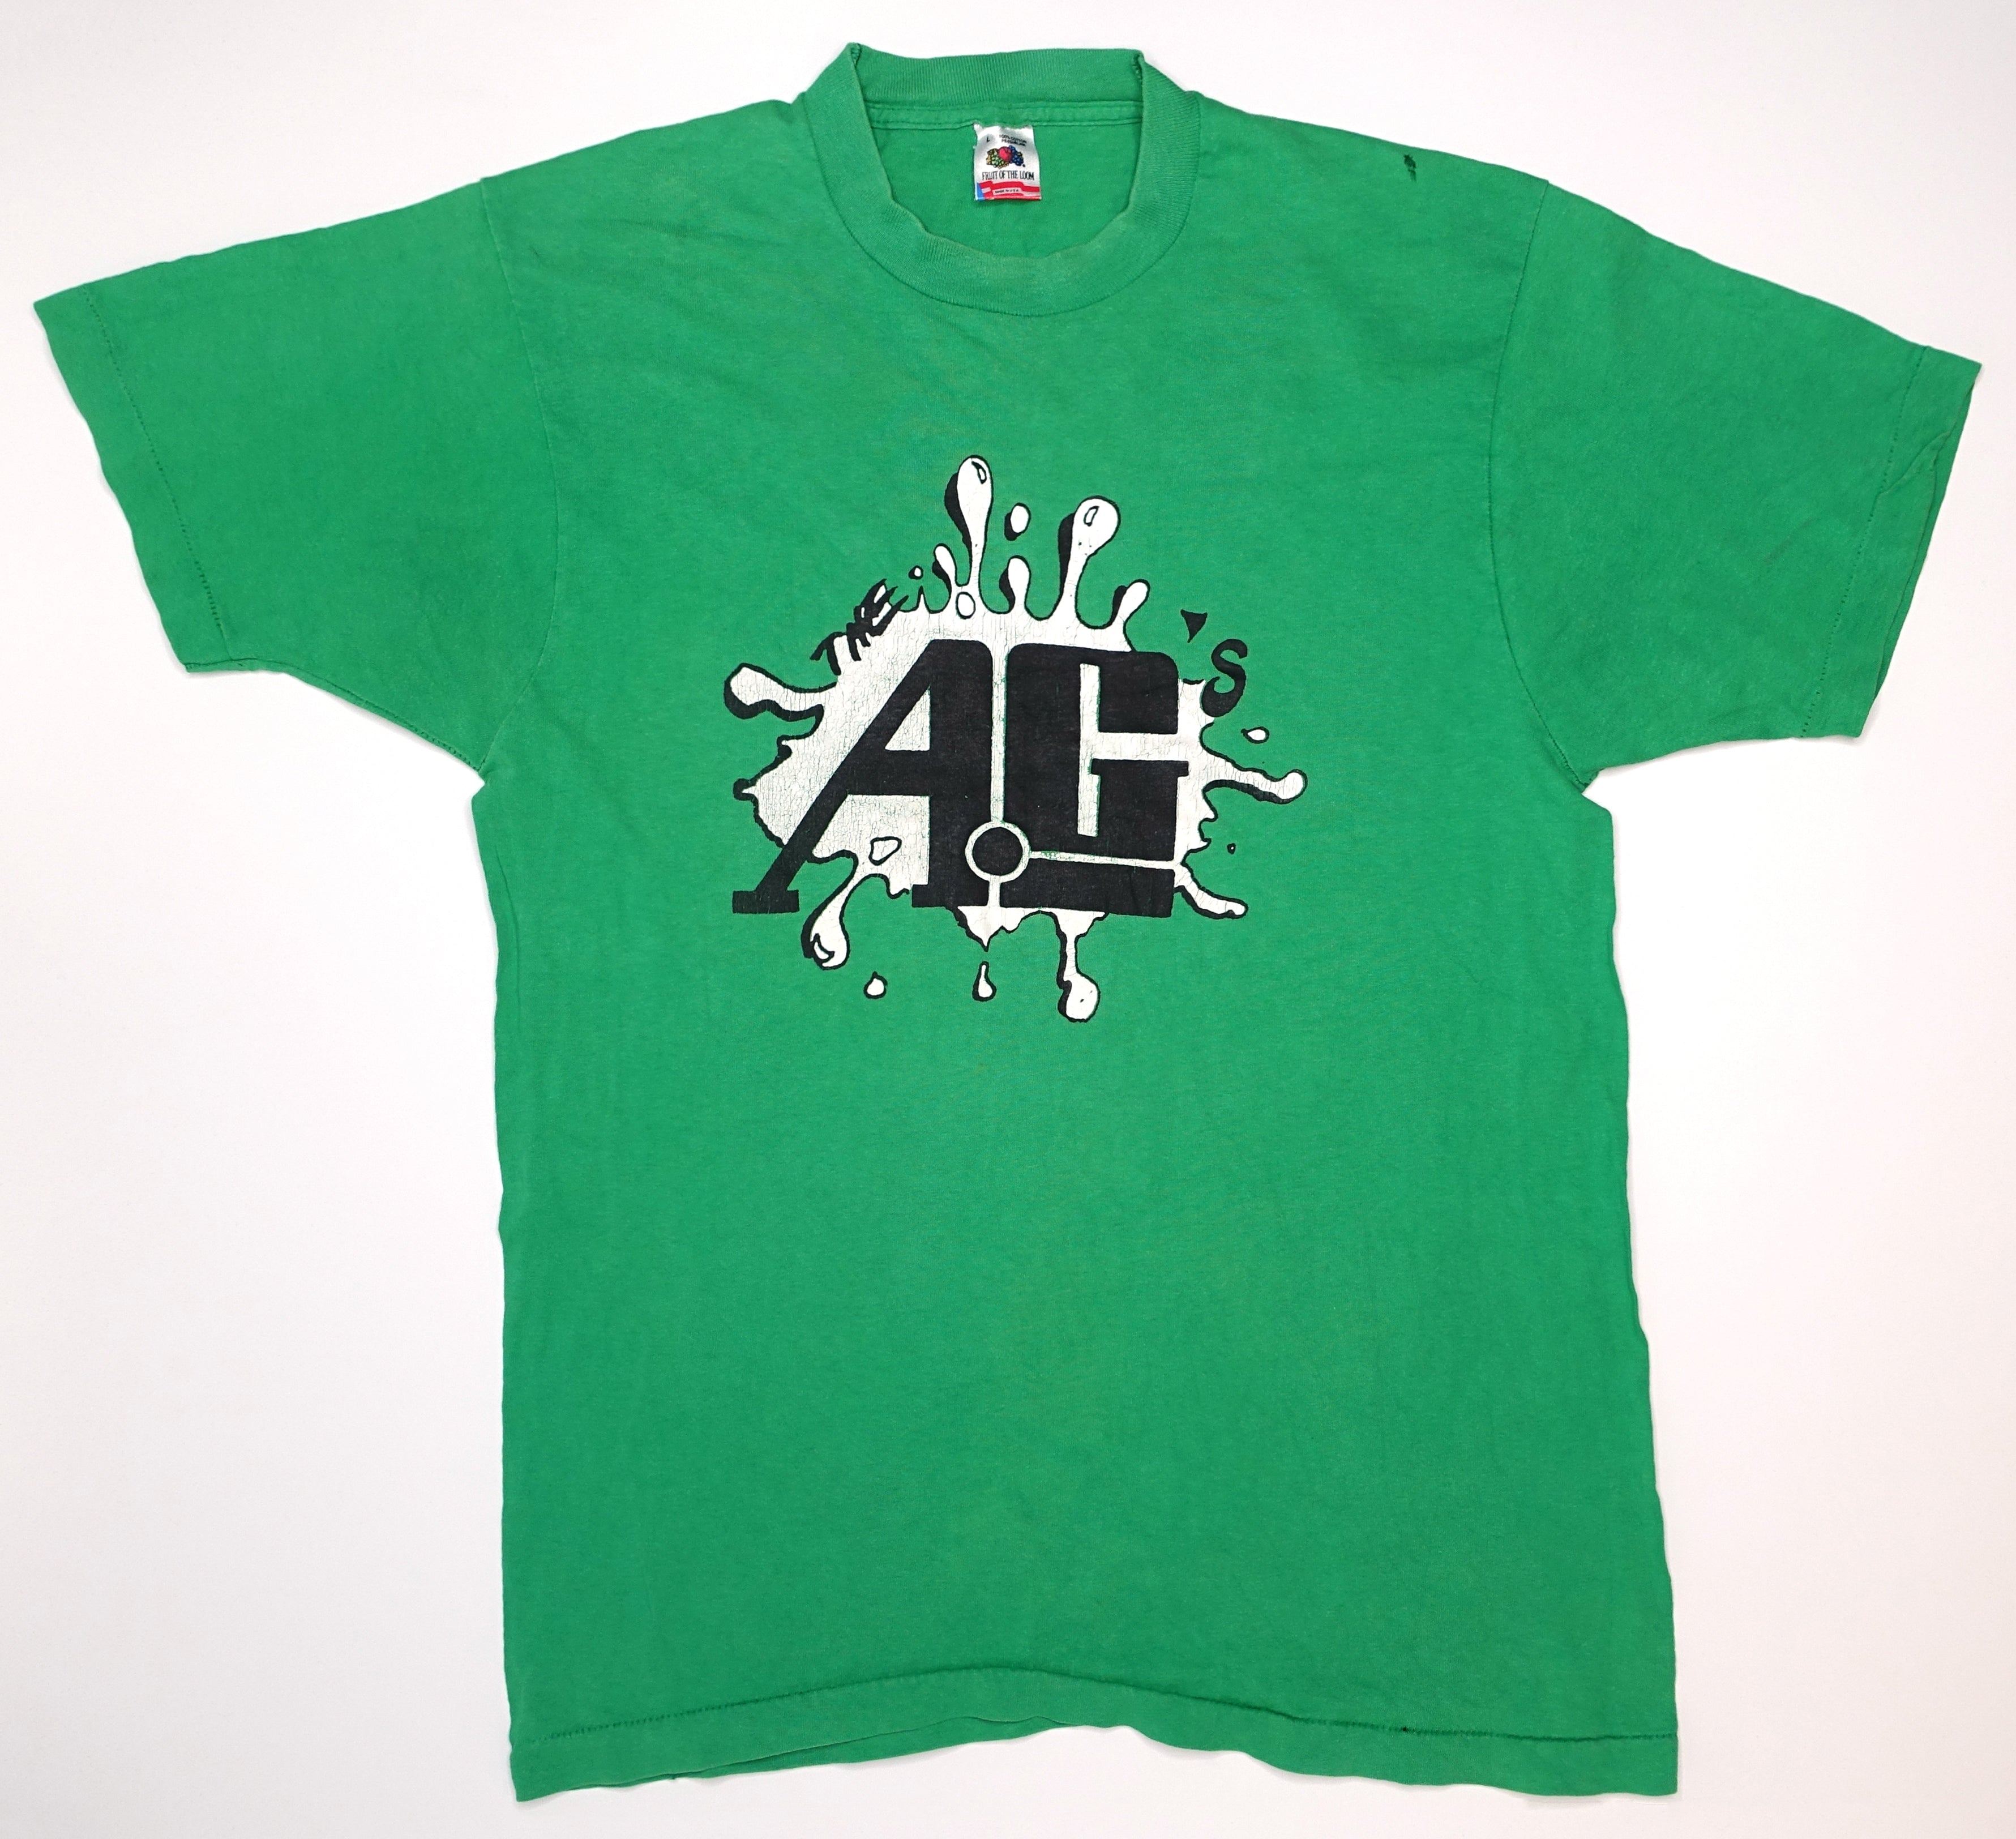 The A.G's - Vibra-Tour 1990 Tour Shirt Size Large